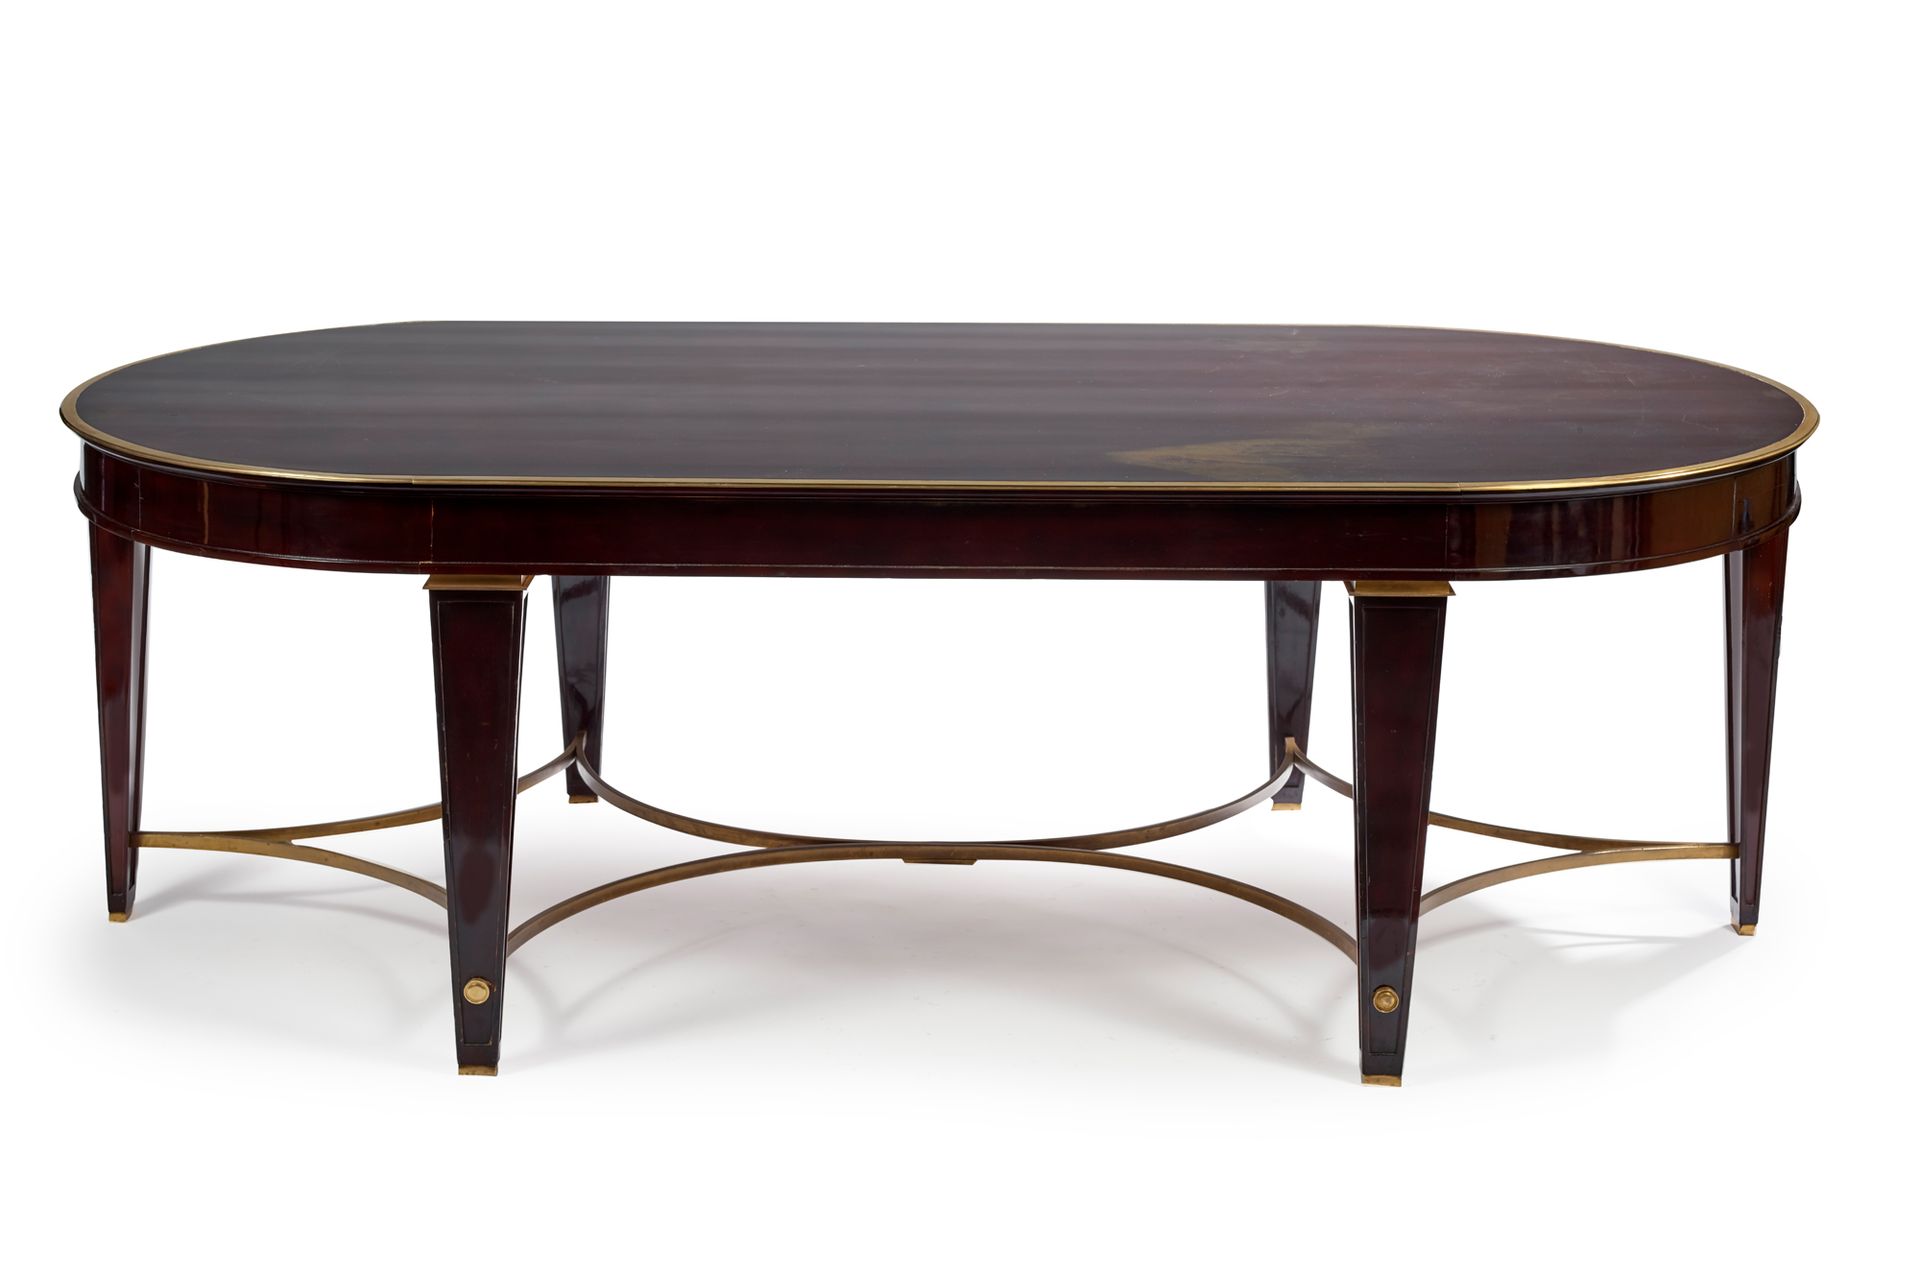 Jean Maurice ROTHSCHILD (1902-1998) 
椭圆形桌面的餐桌，采用阴影棕色漆木，以黄铜环为亮点，放在六个带黄铜环的空心护套腿上，由&hellip;